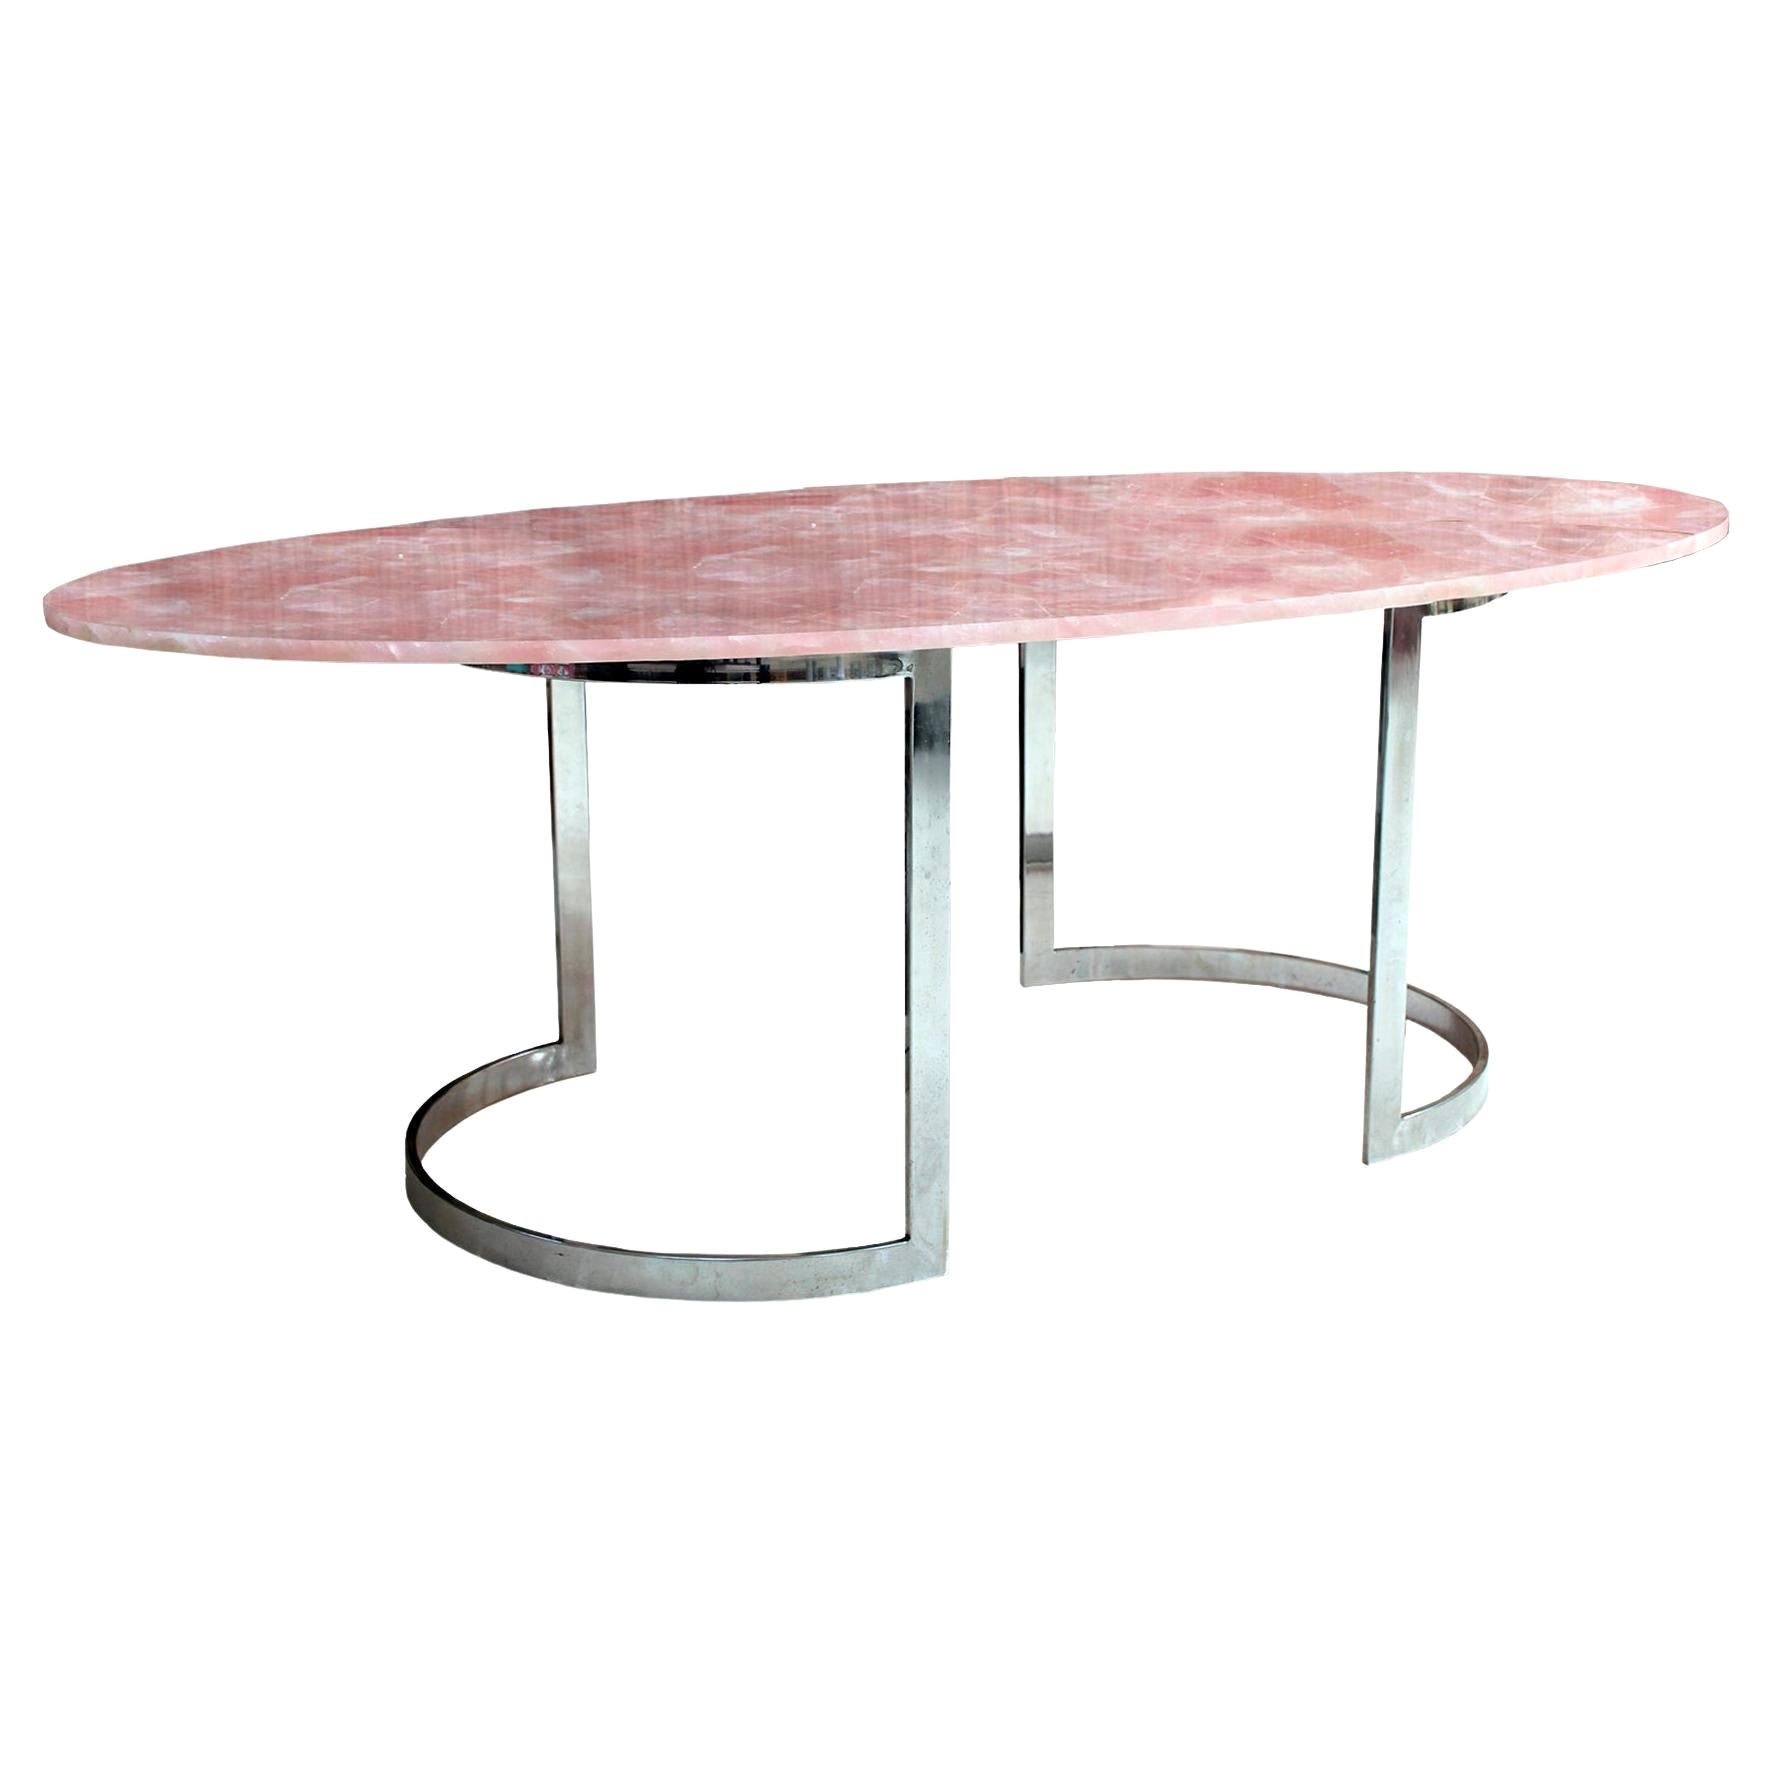 Contemporary Dining Table Made of Rose Quartz Designed by L.A. Studio